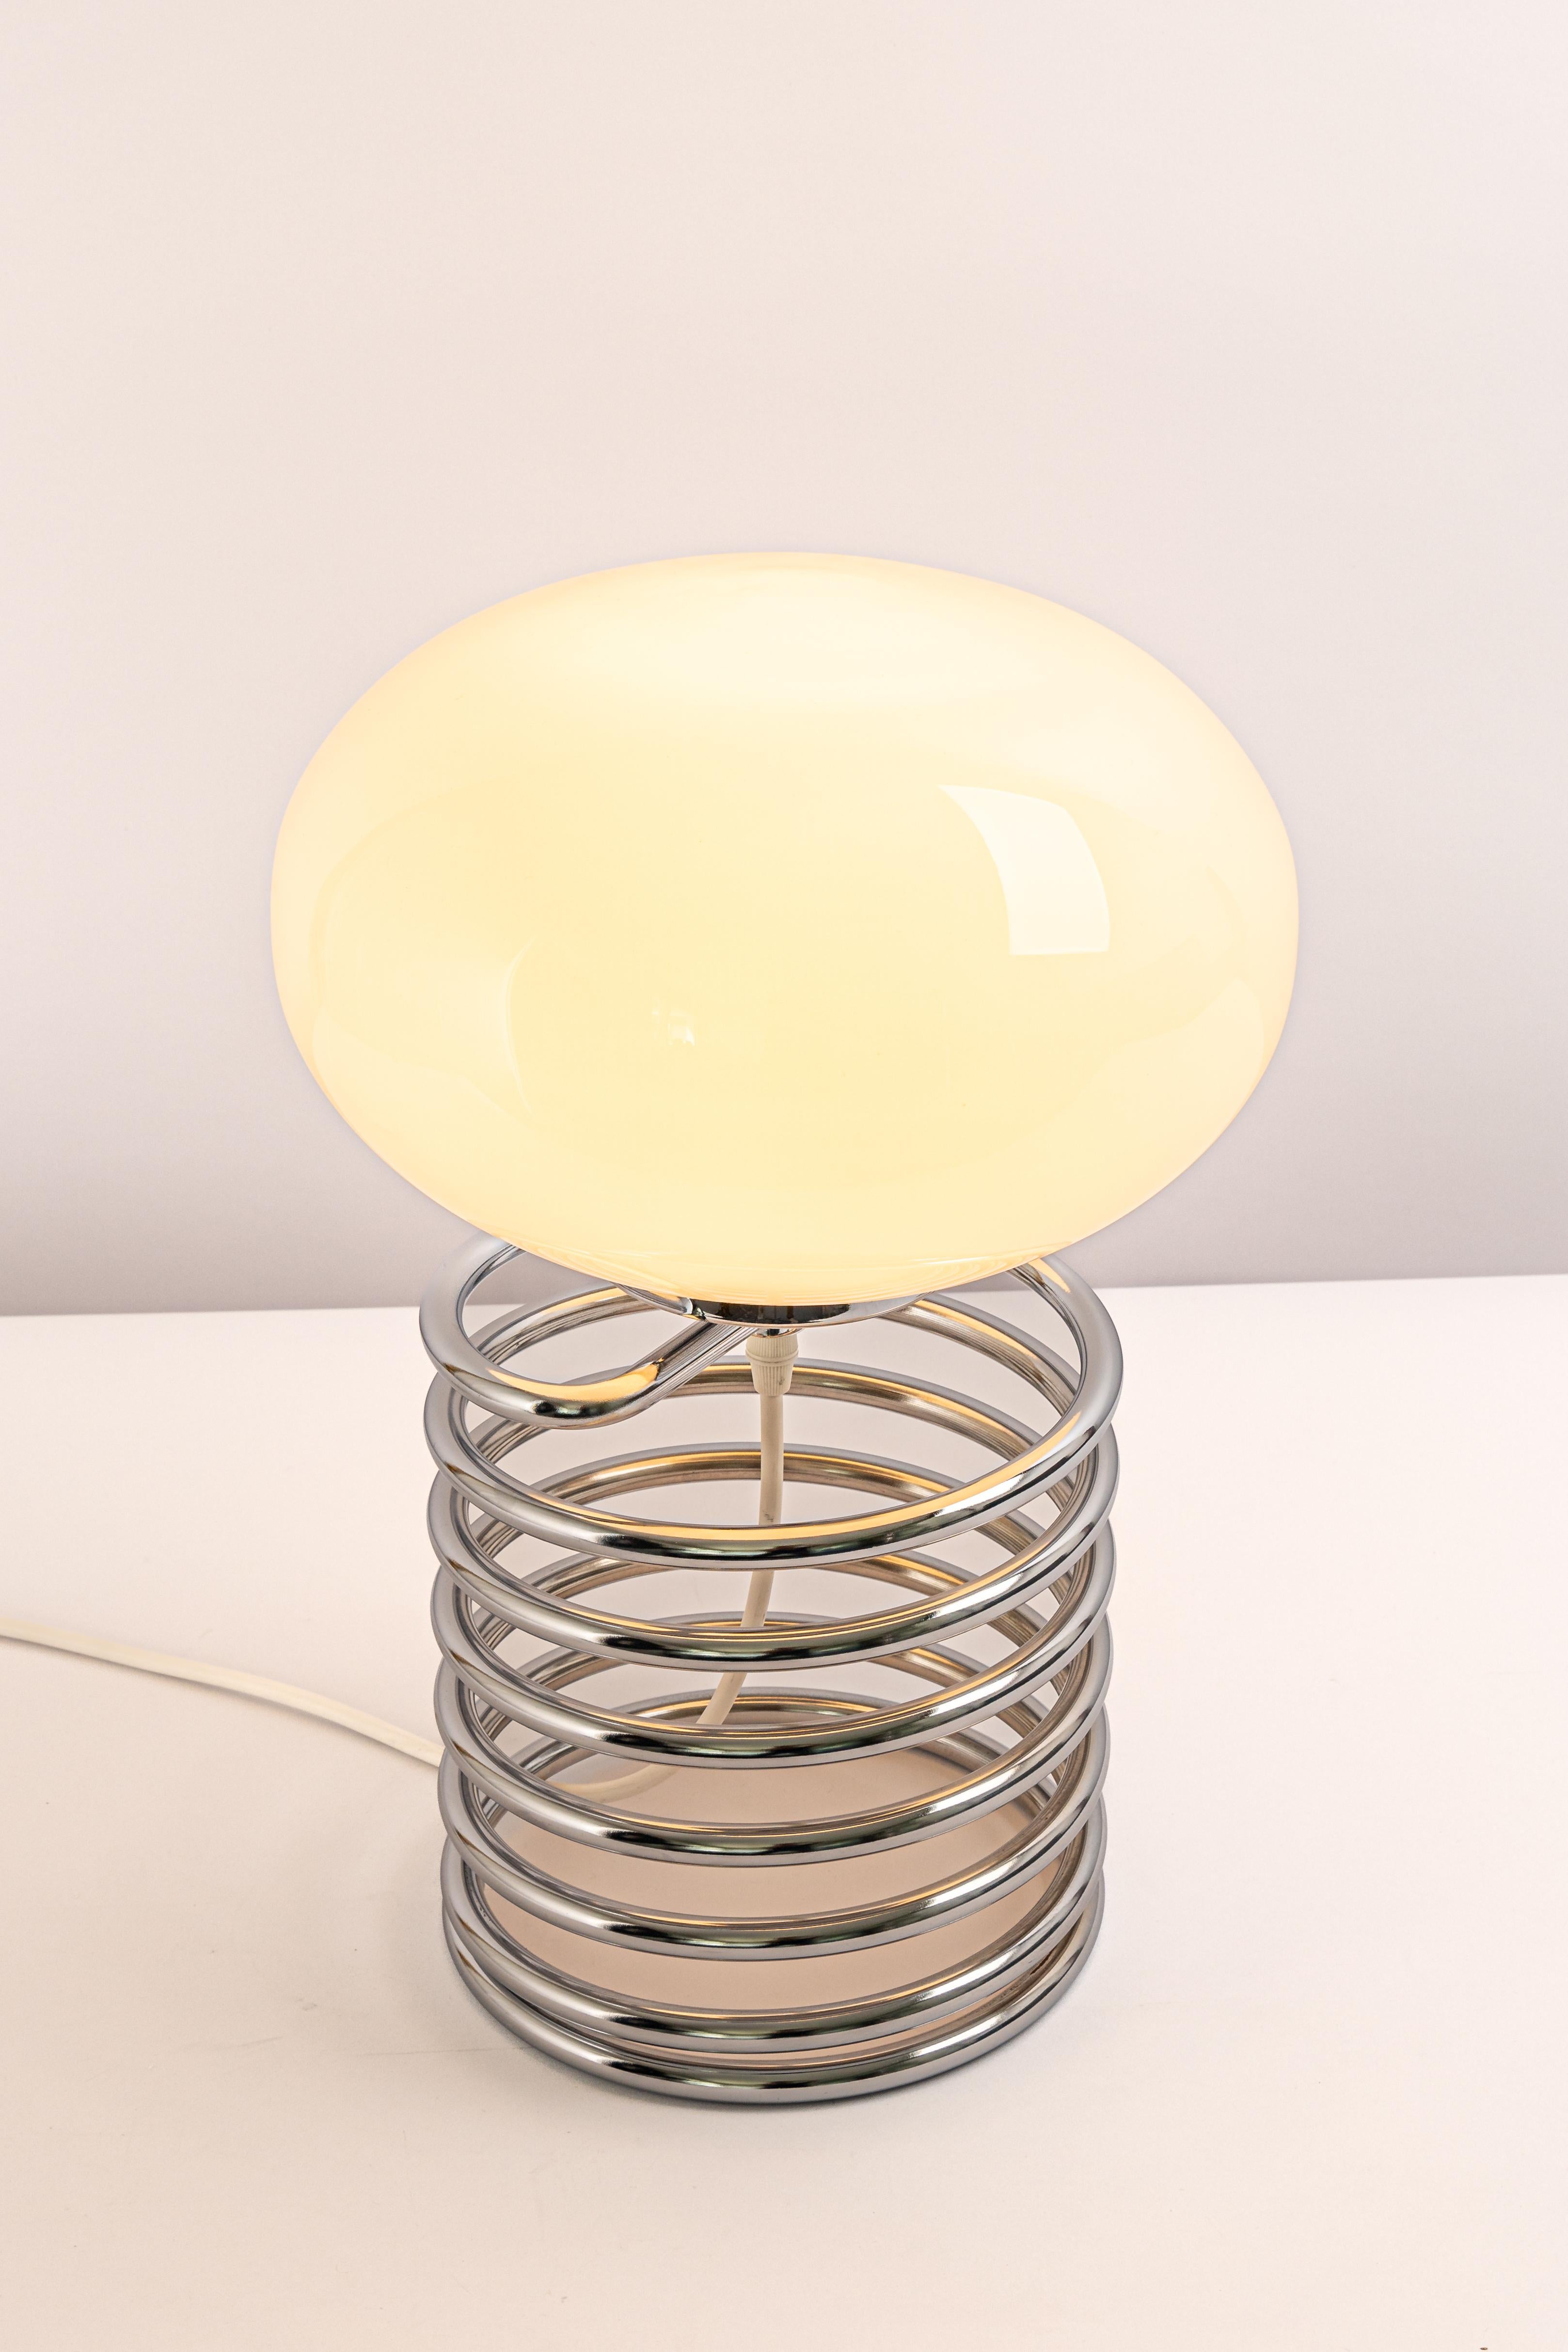 Glass 1 of 2 Stunning Design Spiral Table Lamp, Ingo Maurer, 1970s For Sale